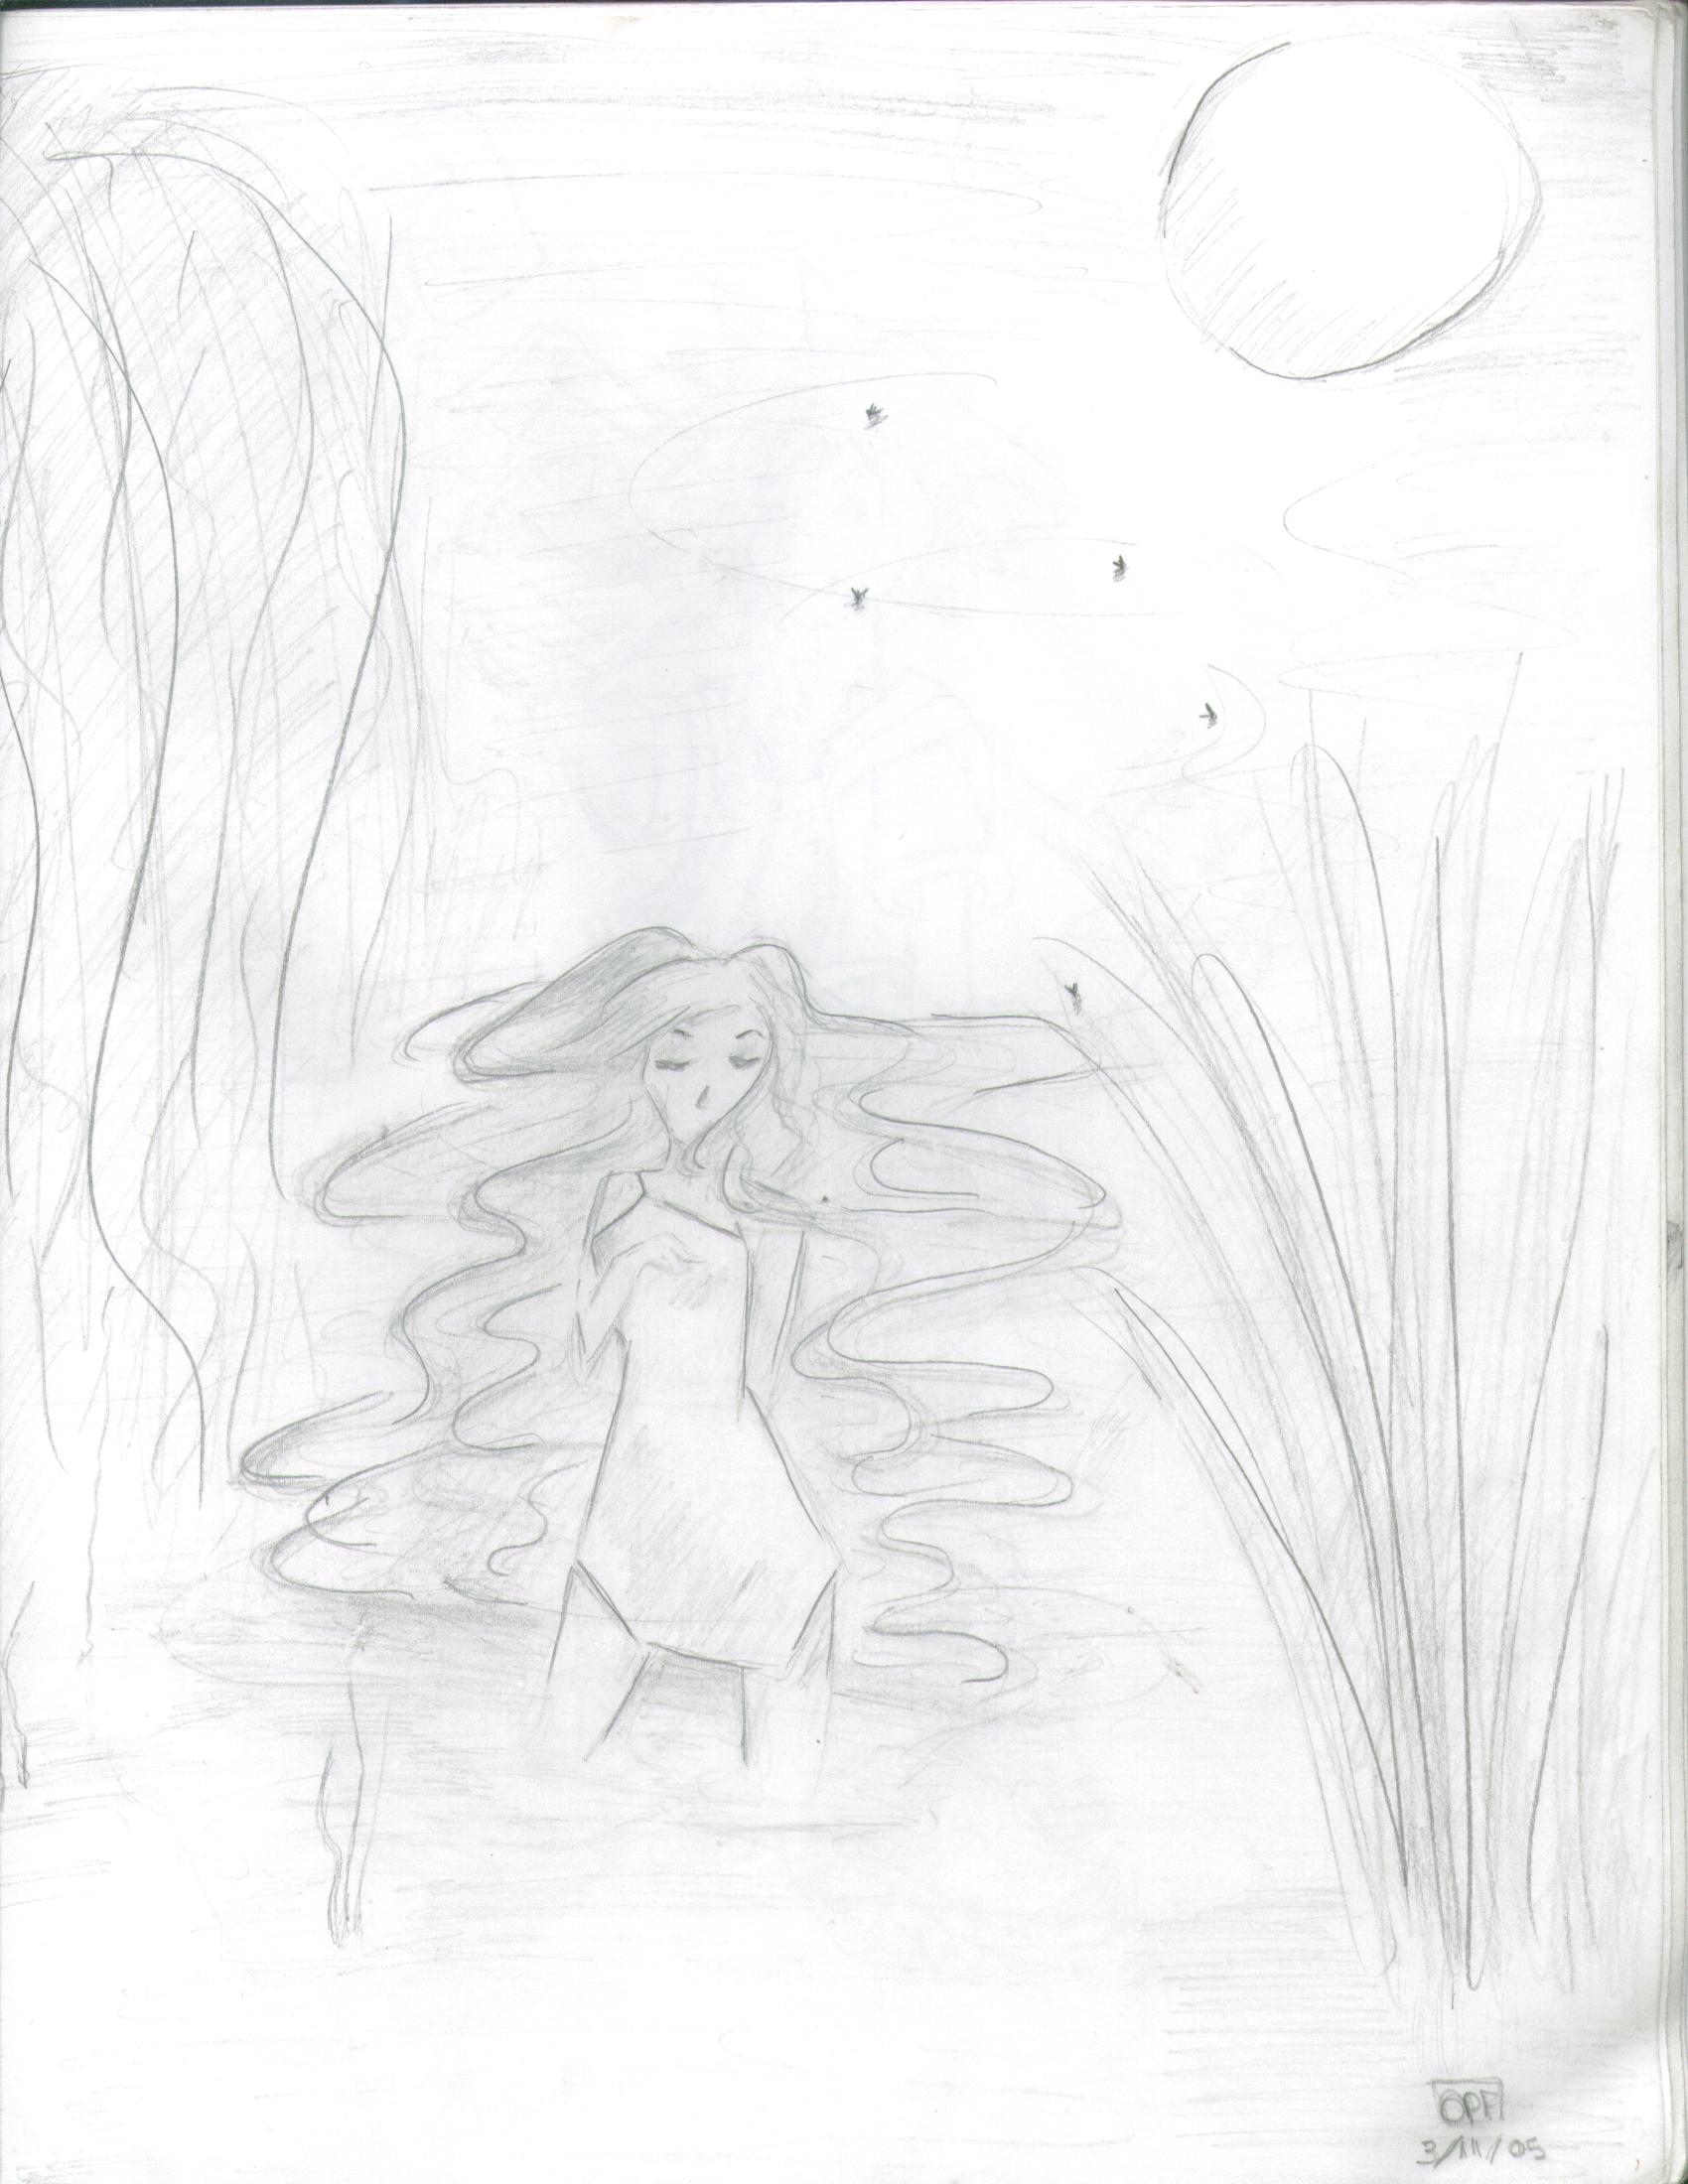 Moody girl in a swamp..o.o by Kuroneko-sama